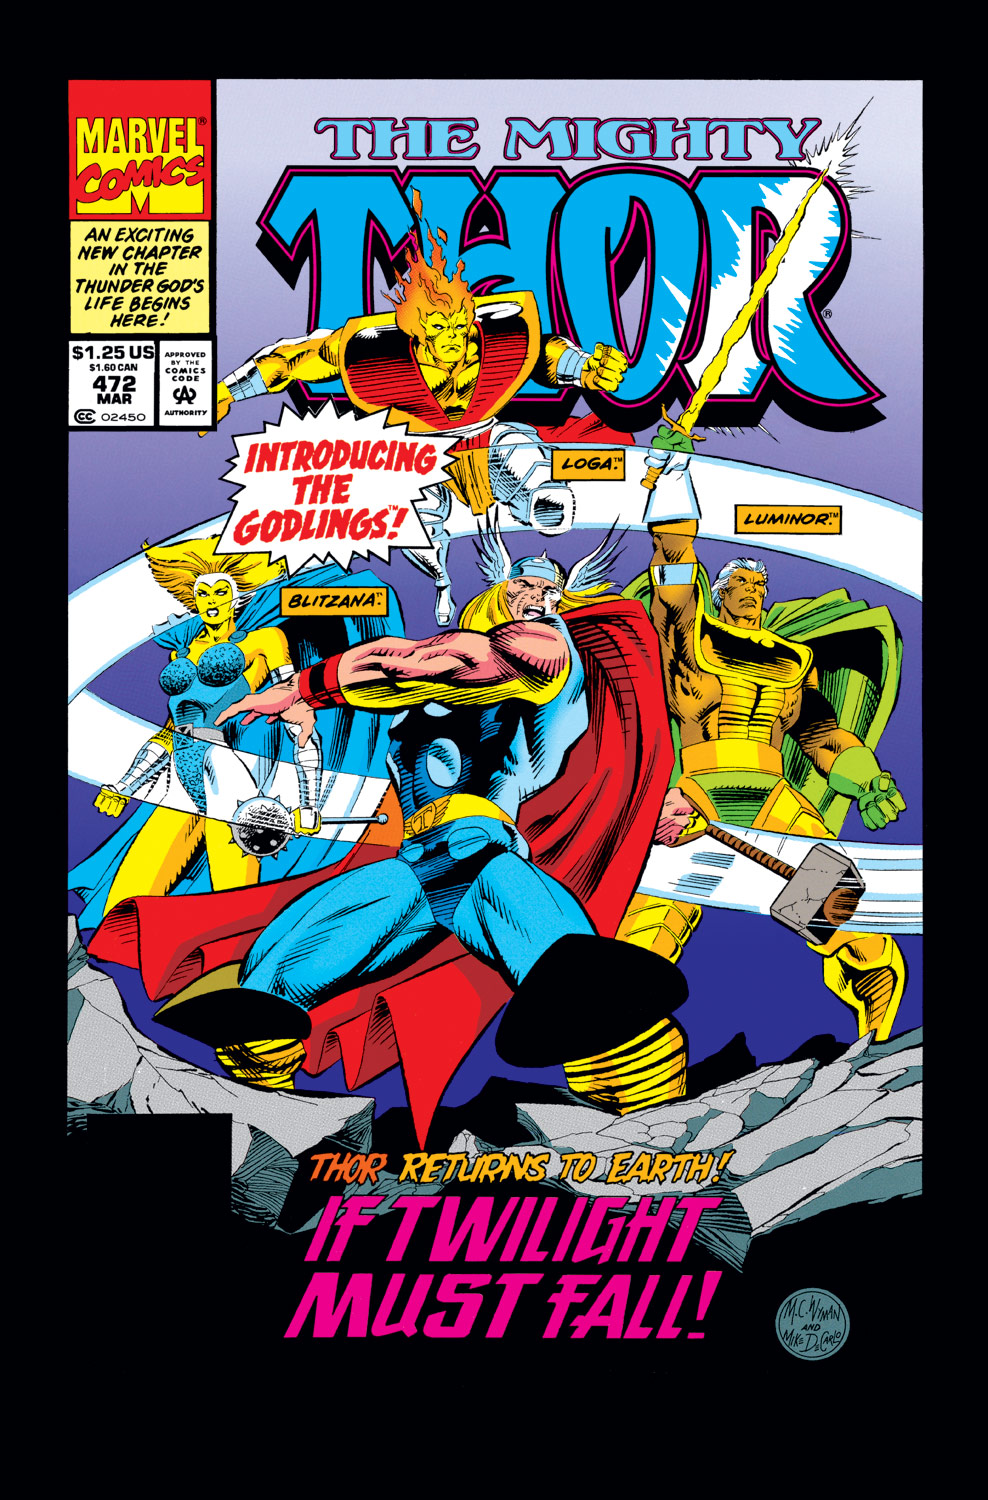 Thor (1966) #472